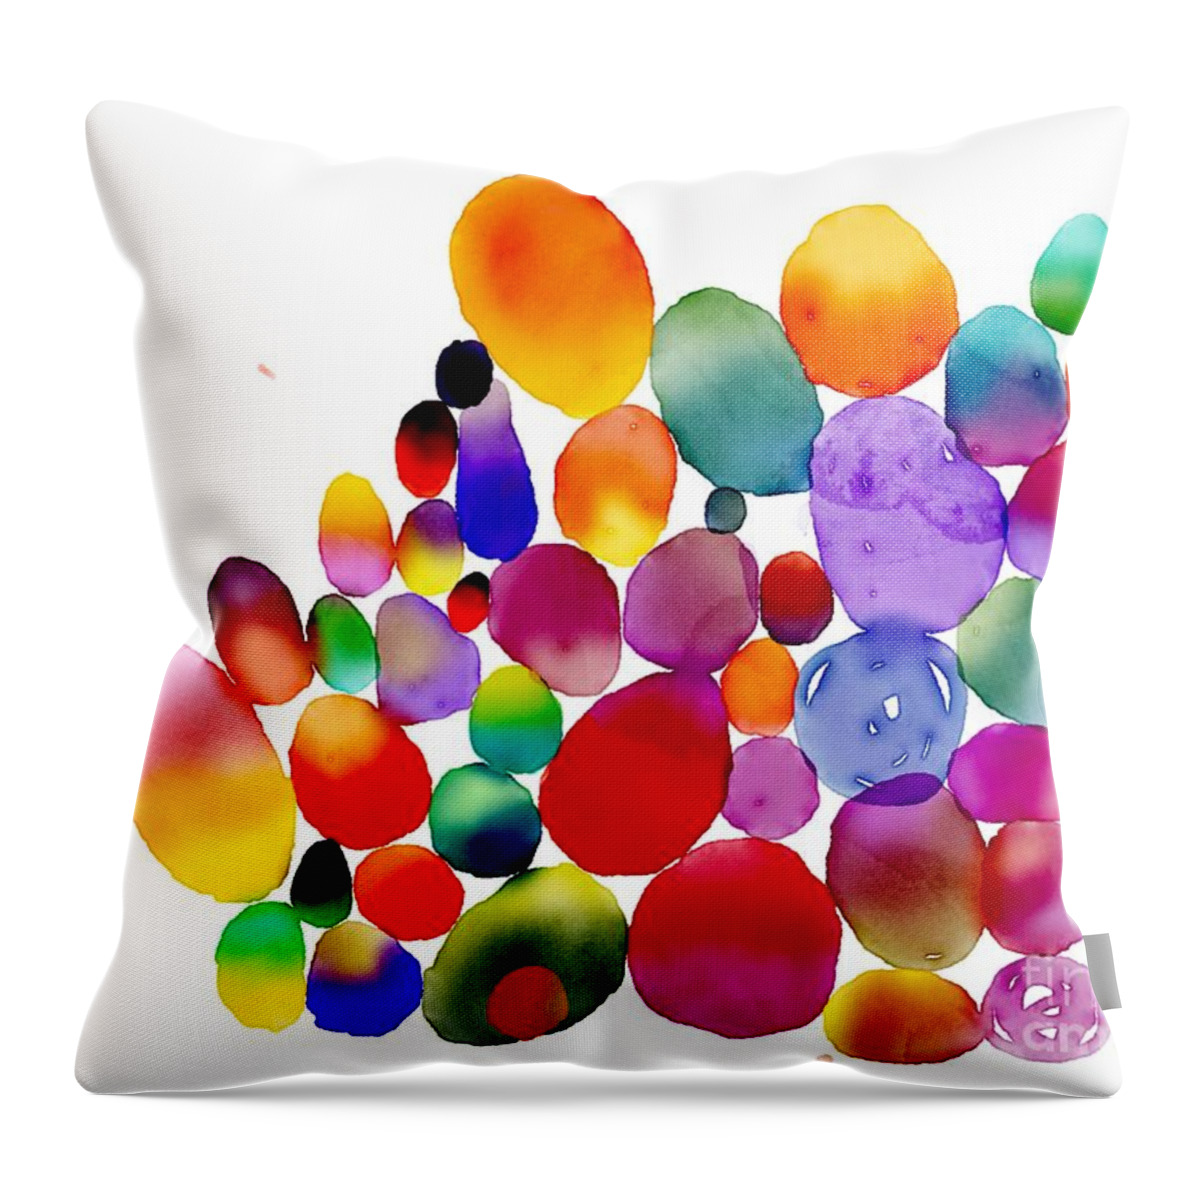 Color Throw Pillow featuring the digital art Color Bubbles by Joe Roache